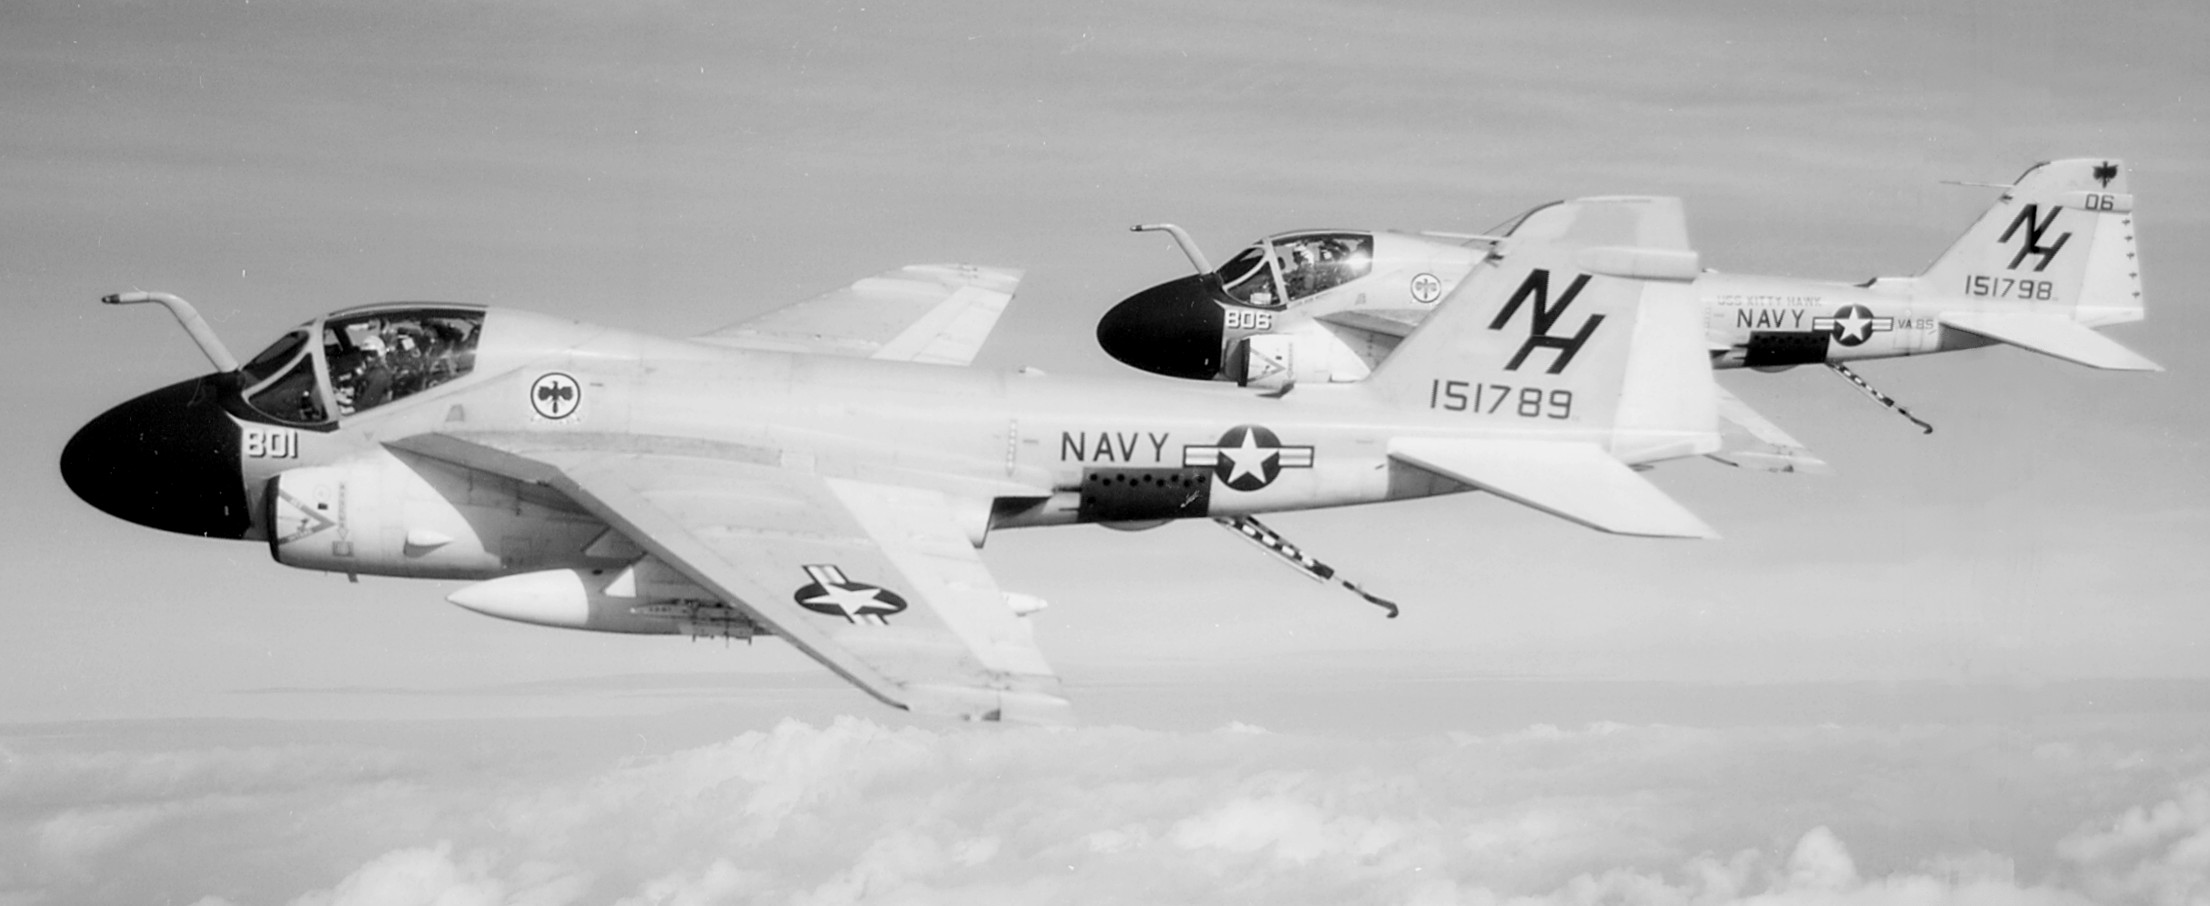 va-85 black falcons attack squadron us navy a-6a intruder carrier air wing cvw-11 uss kitty hawk cva-63 04